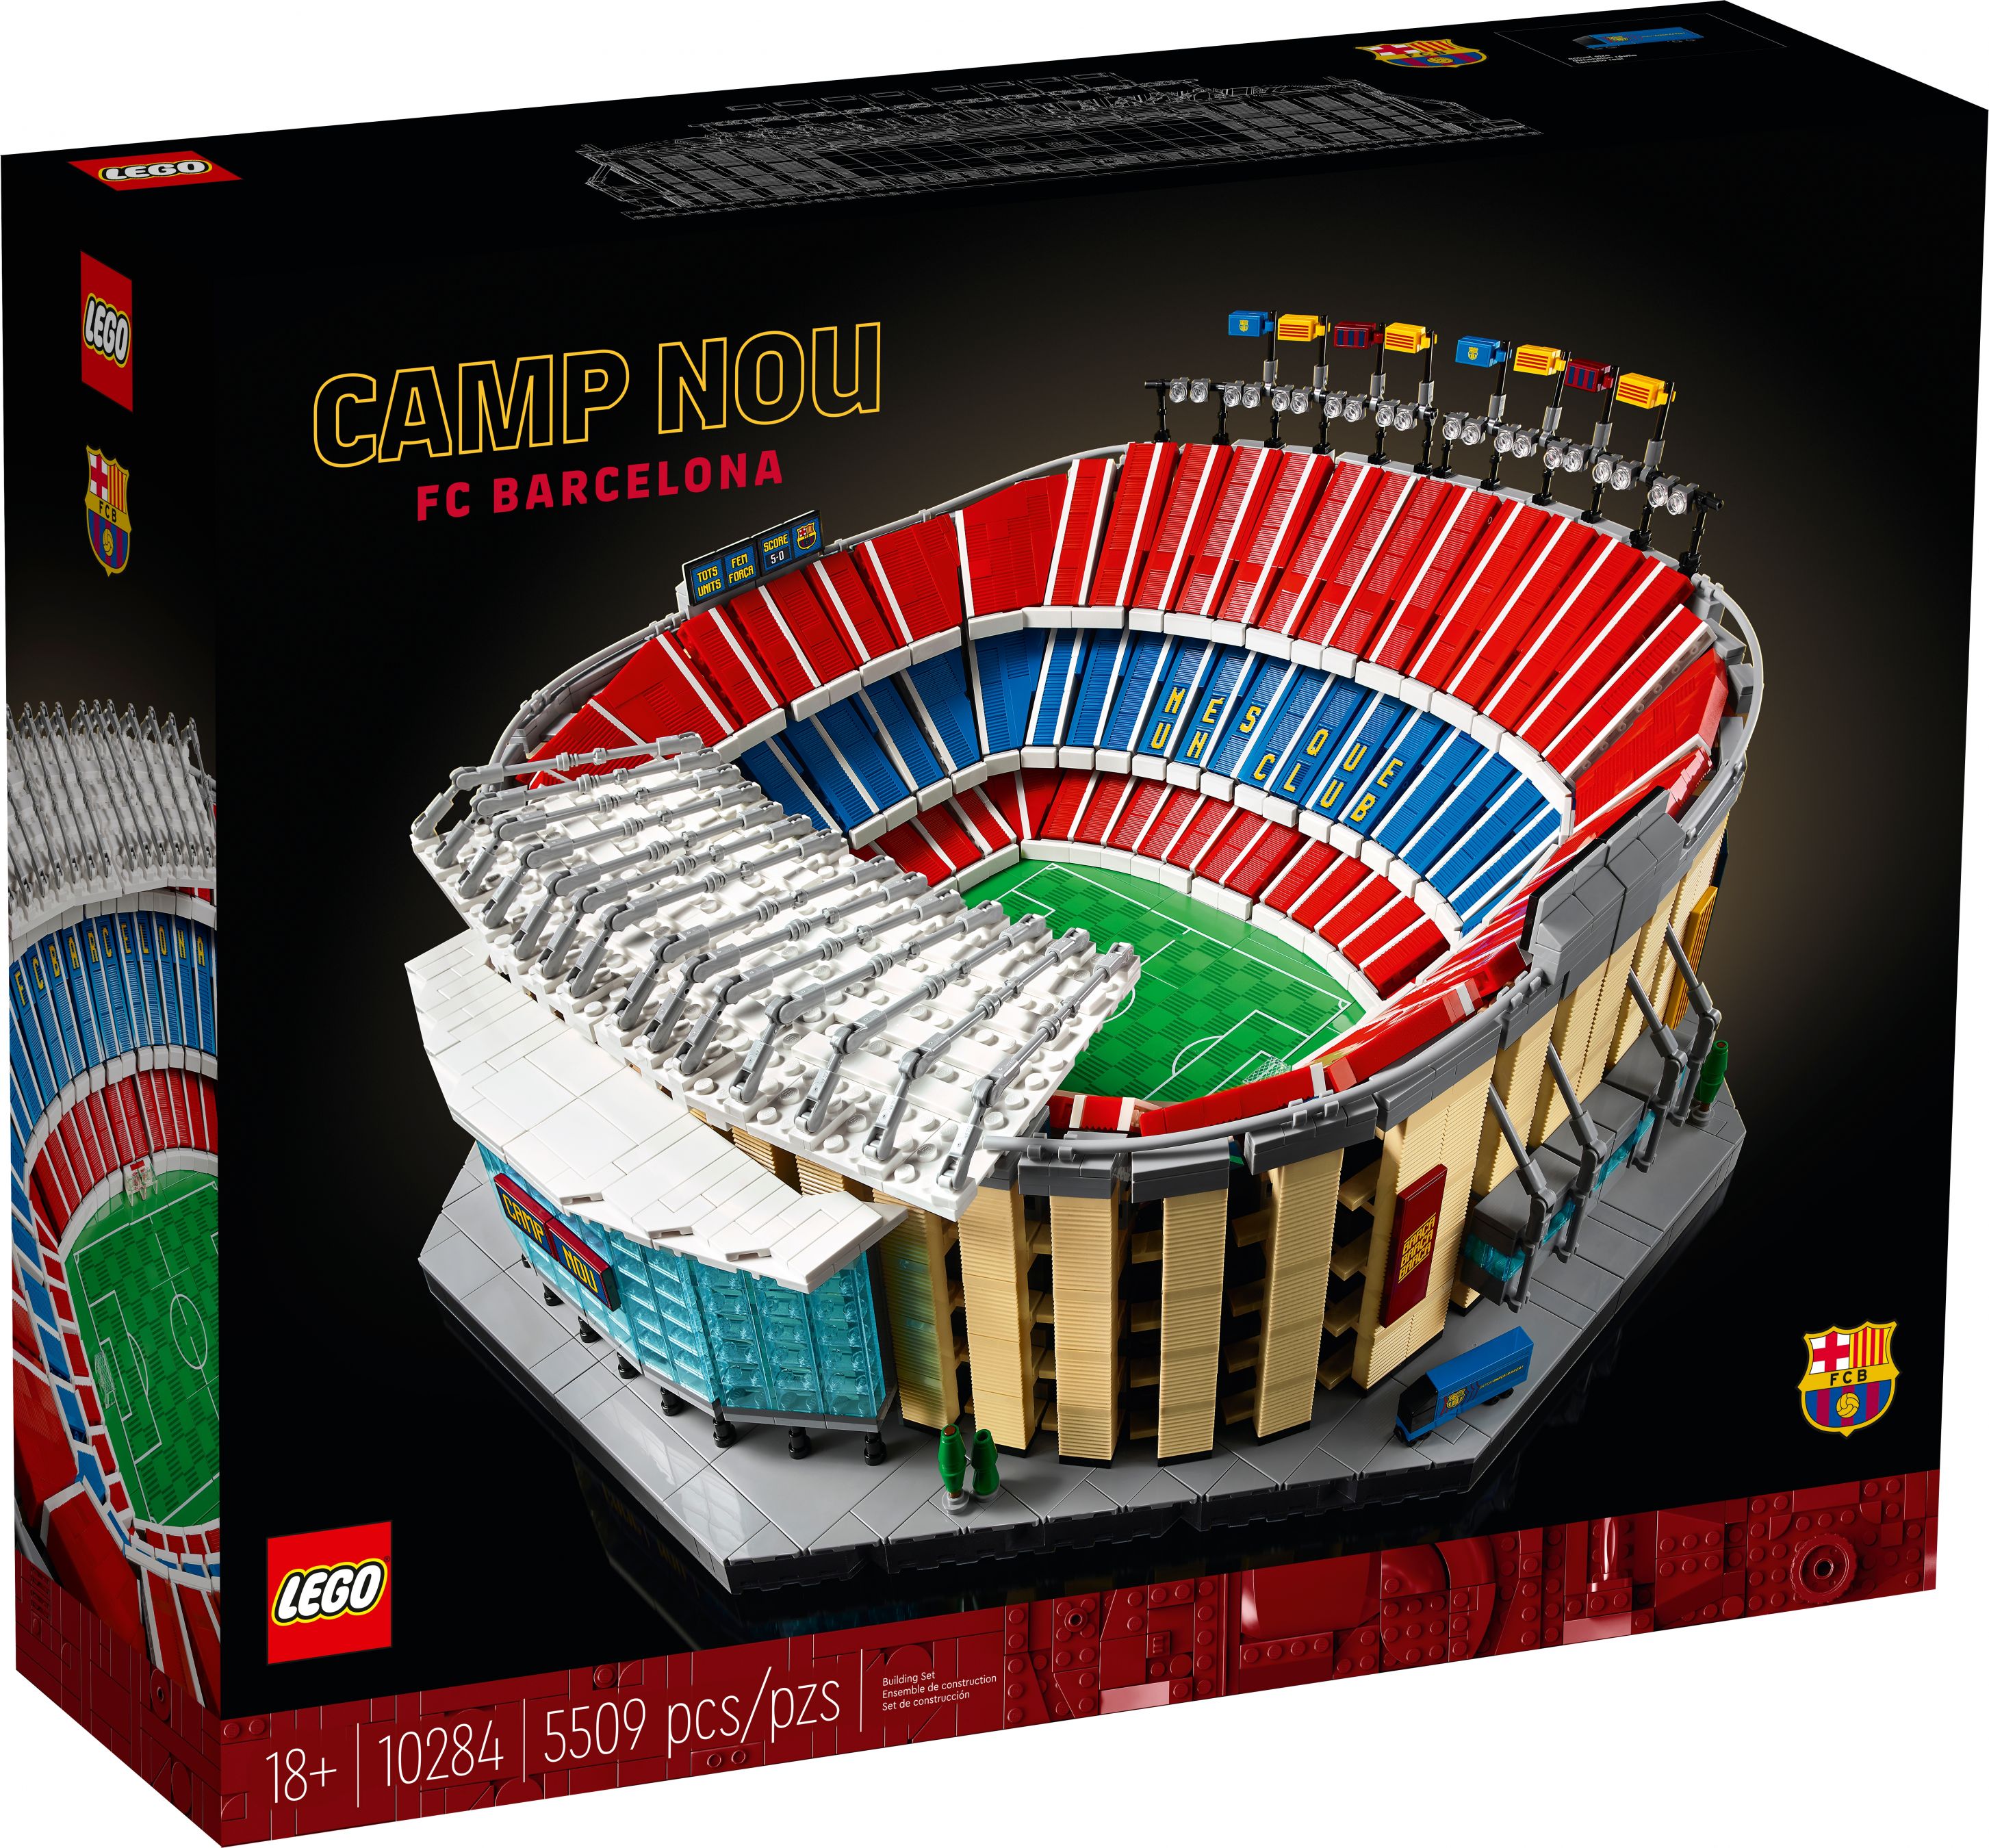 LEGO Advanced Models 10284 Camp Nou – FC Barcelona LEGO_10284_alt1.jpg